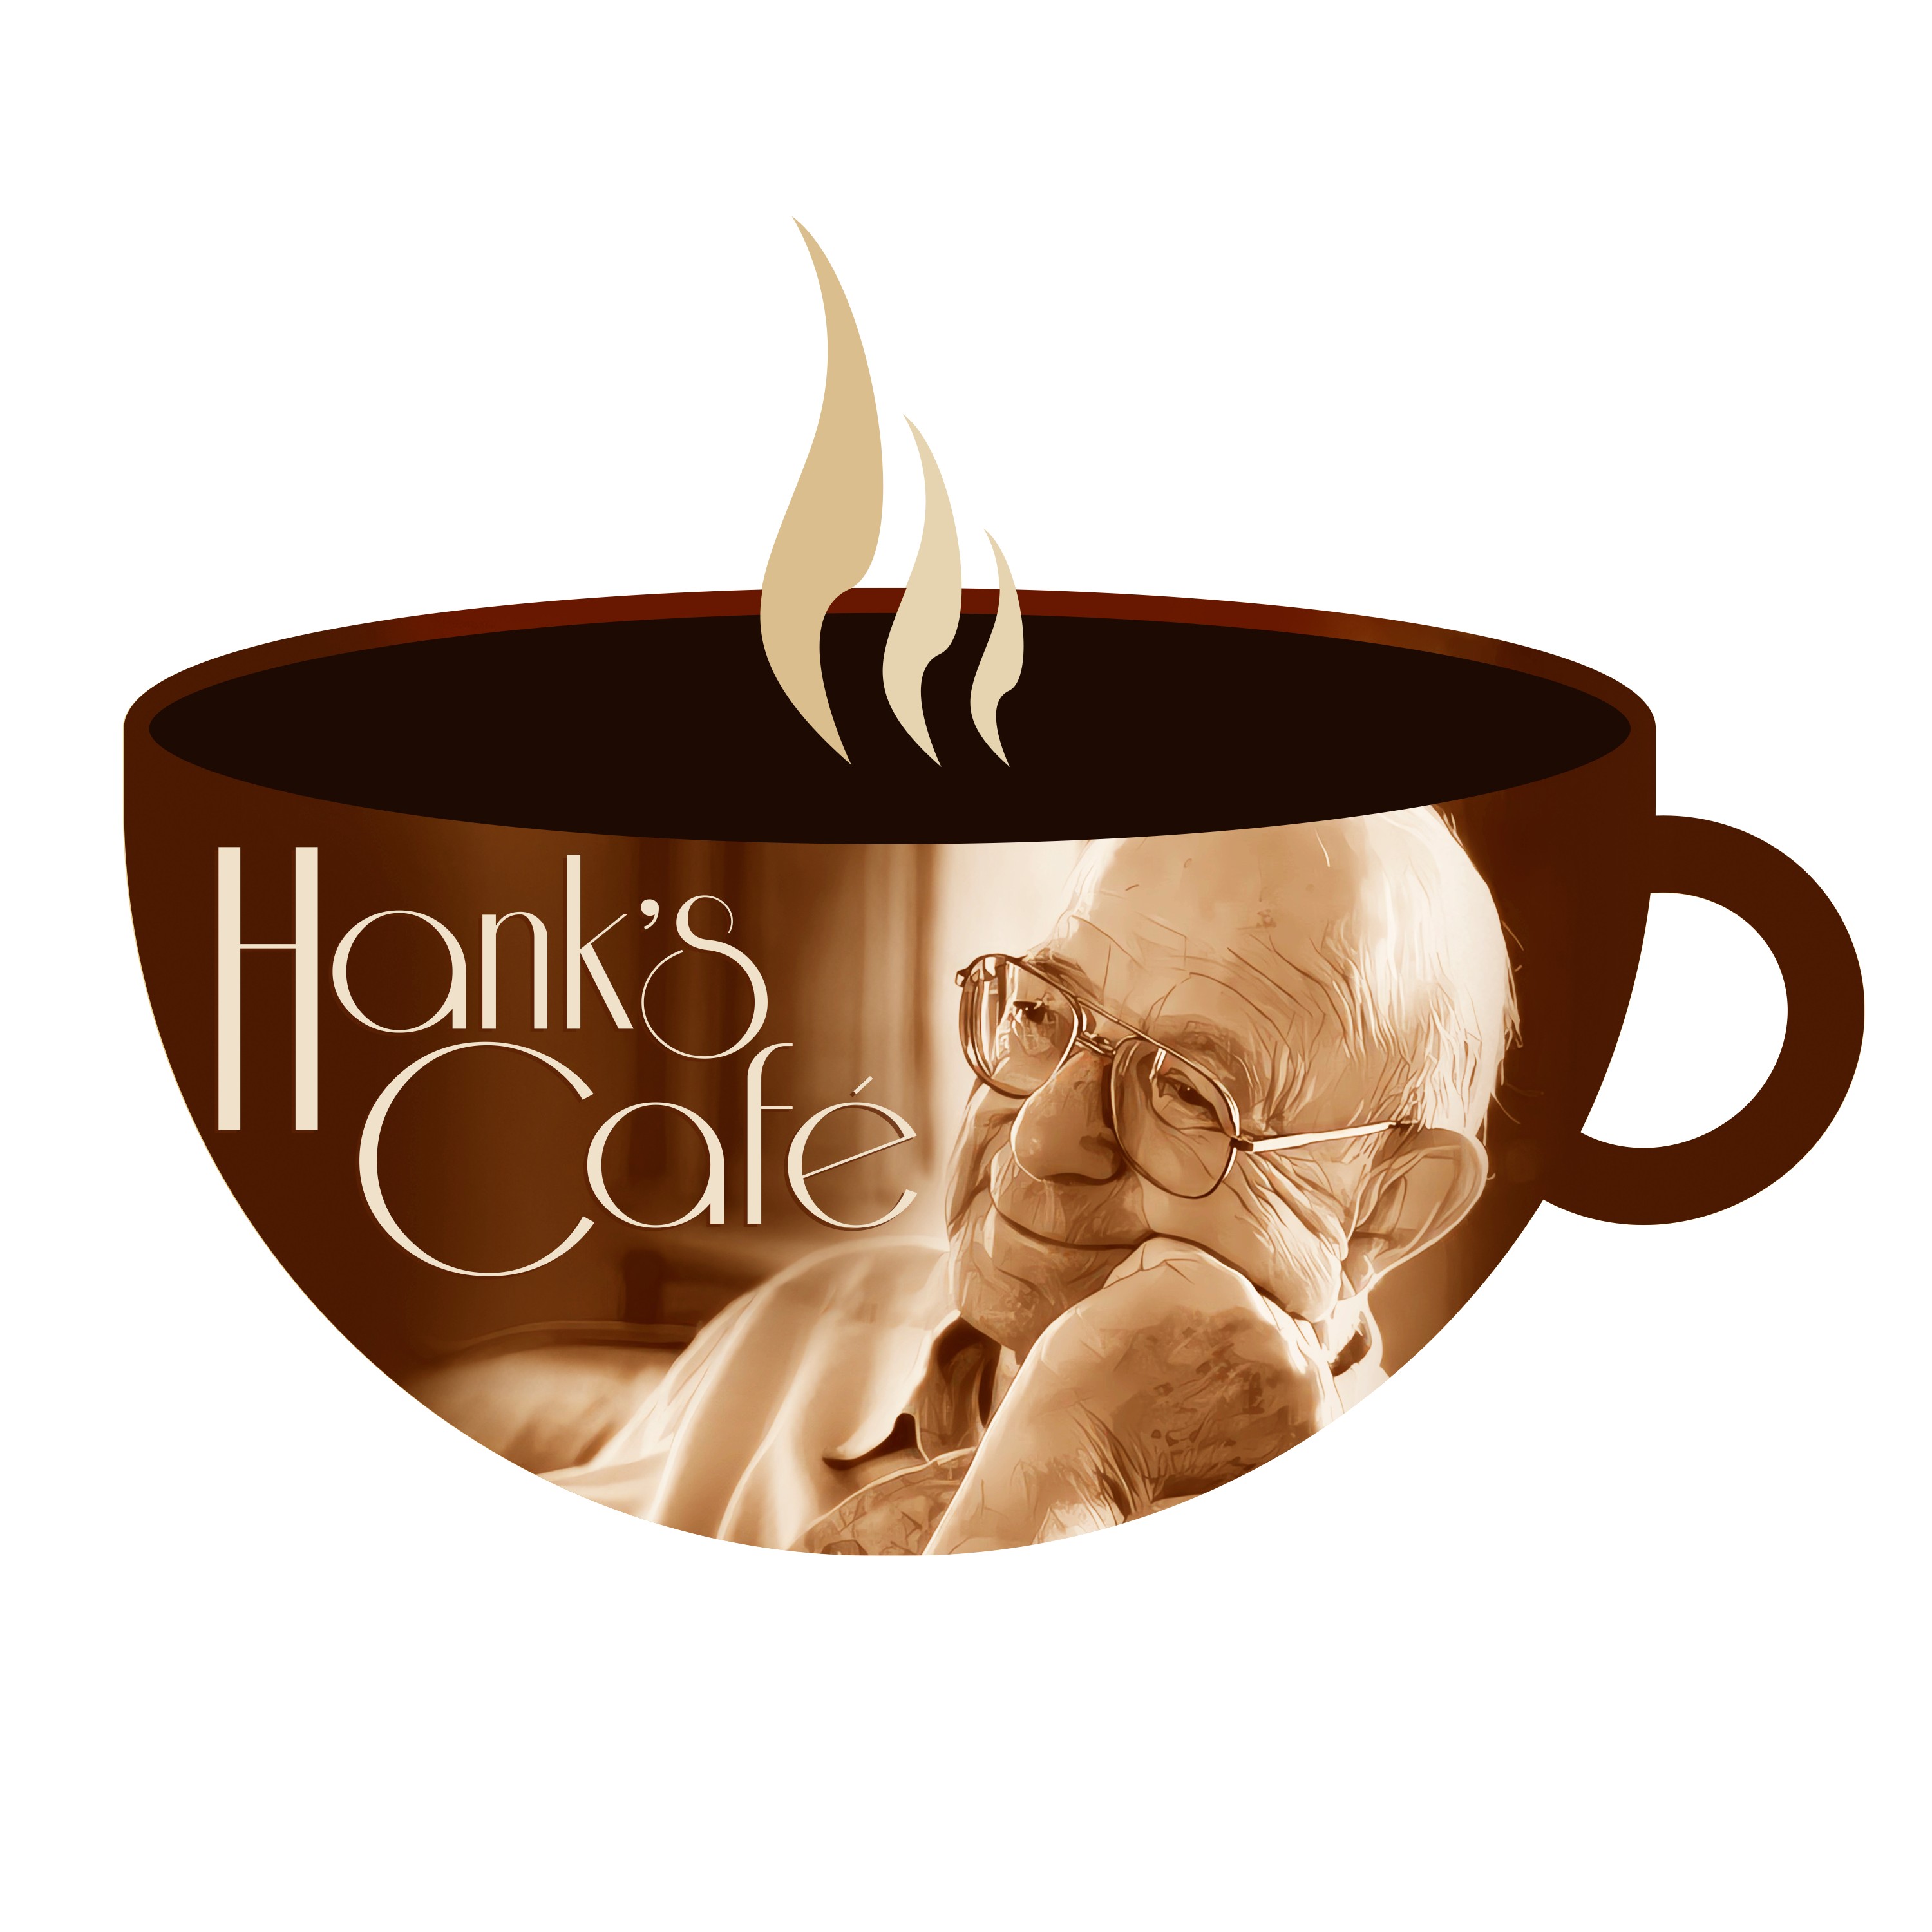 Hank's Cafe 10203 Santa Monica Blvd